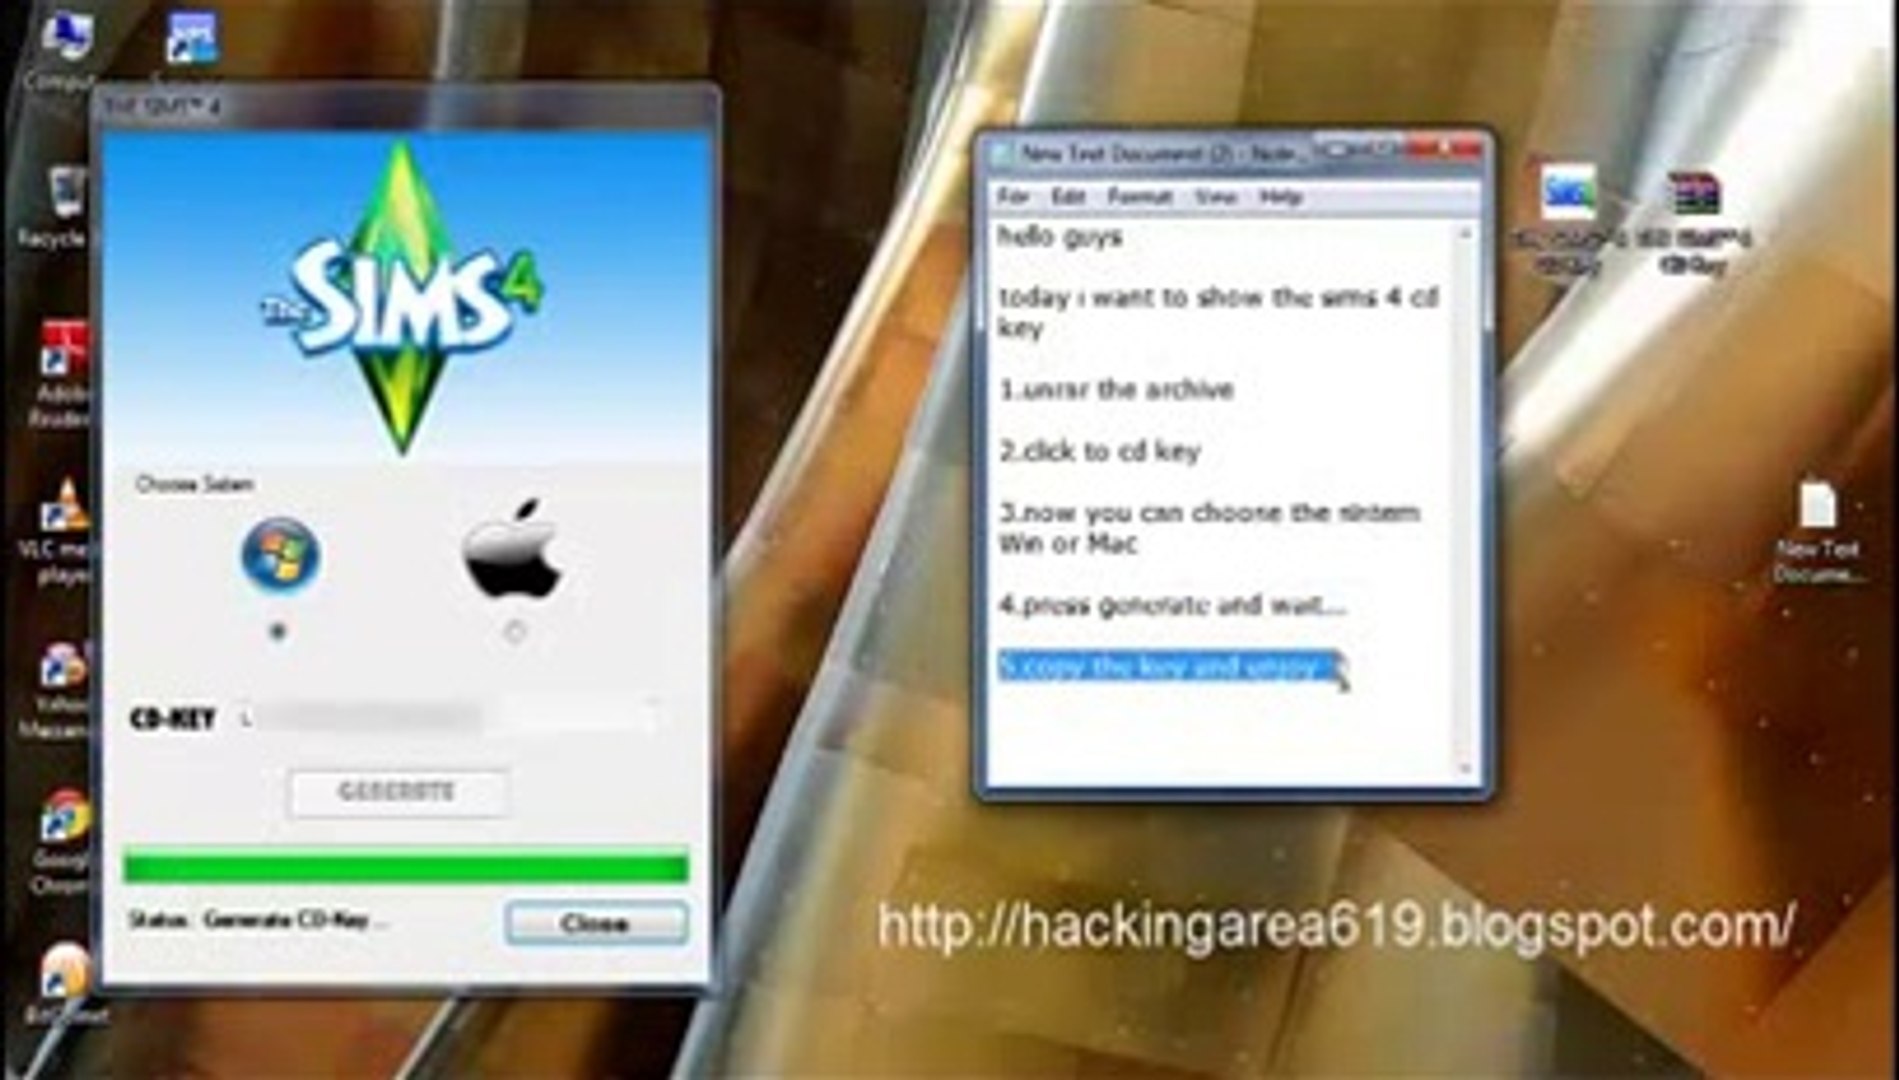 The Sims 4 (Mac , PC) Origin Cd-Key Generator 2014 v.1.0 working - video  Dailymotion